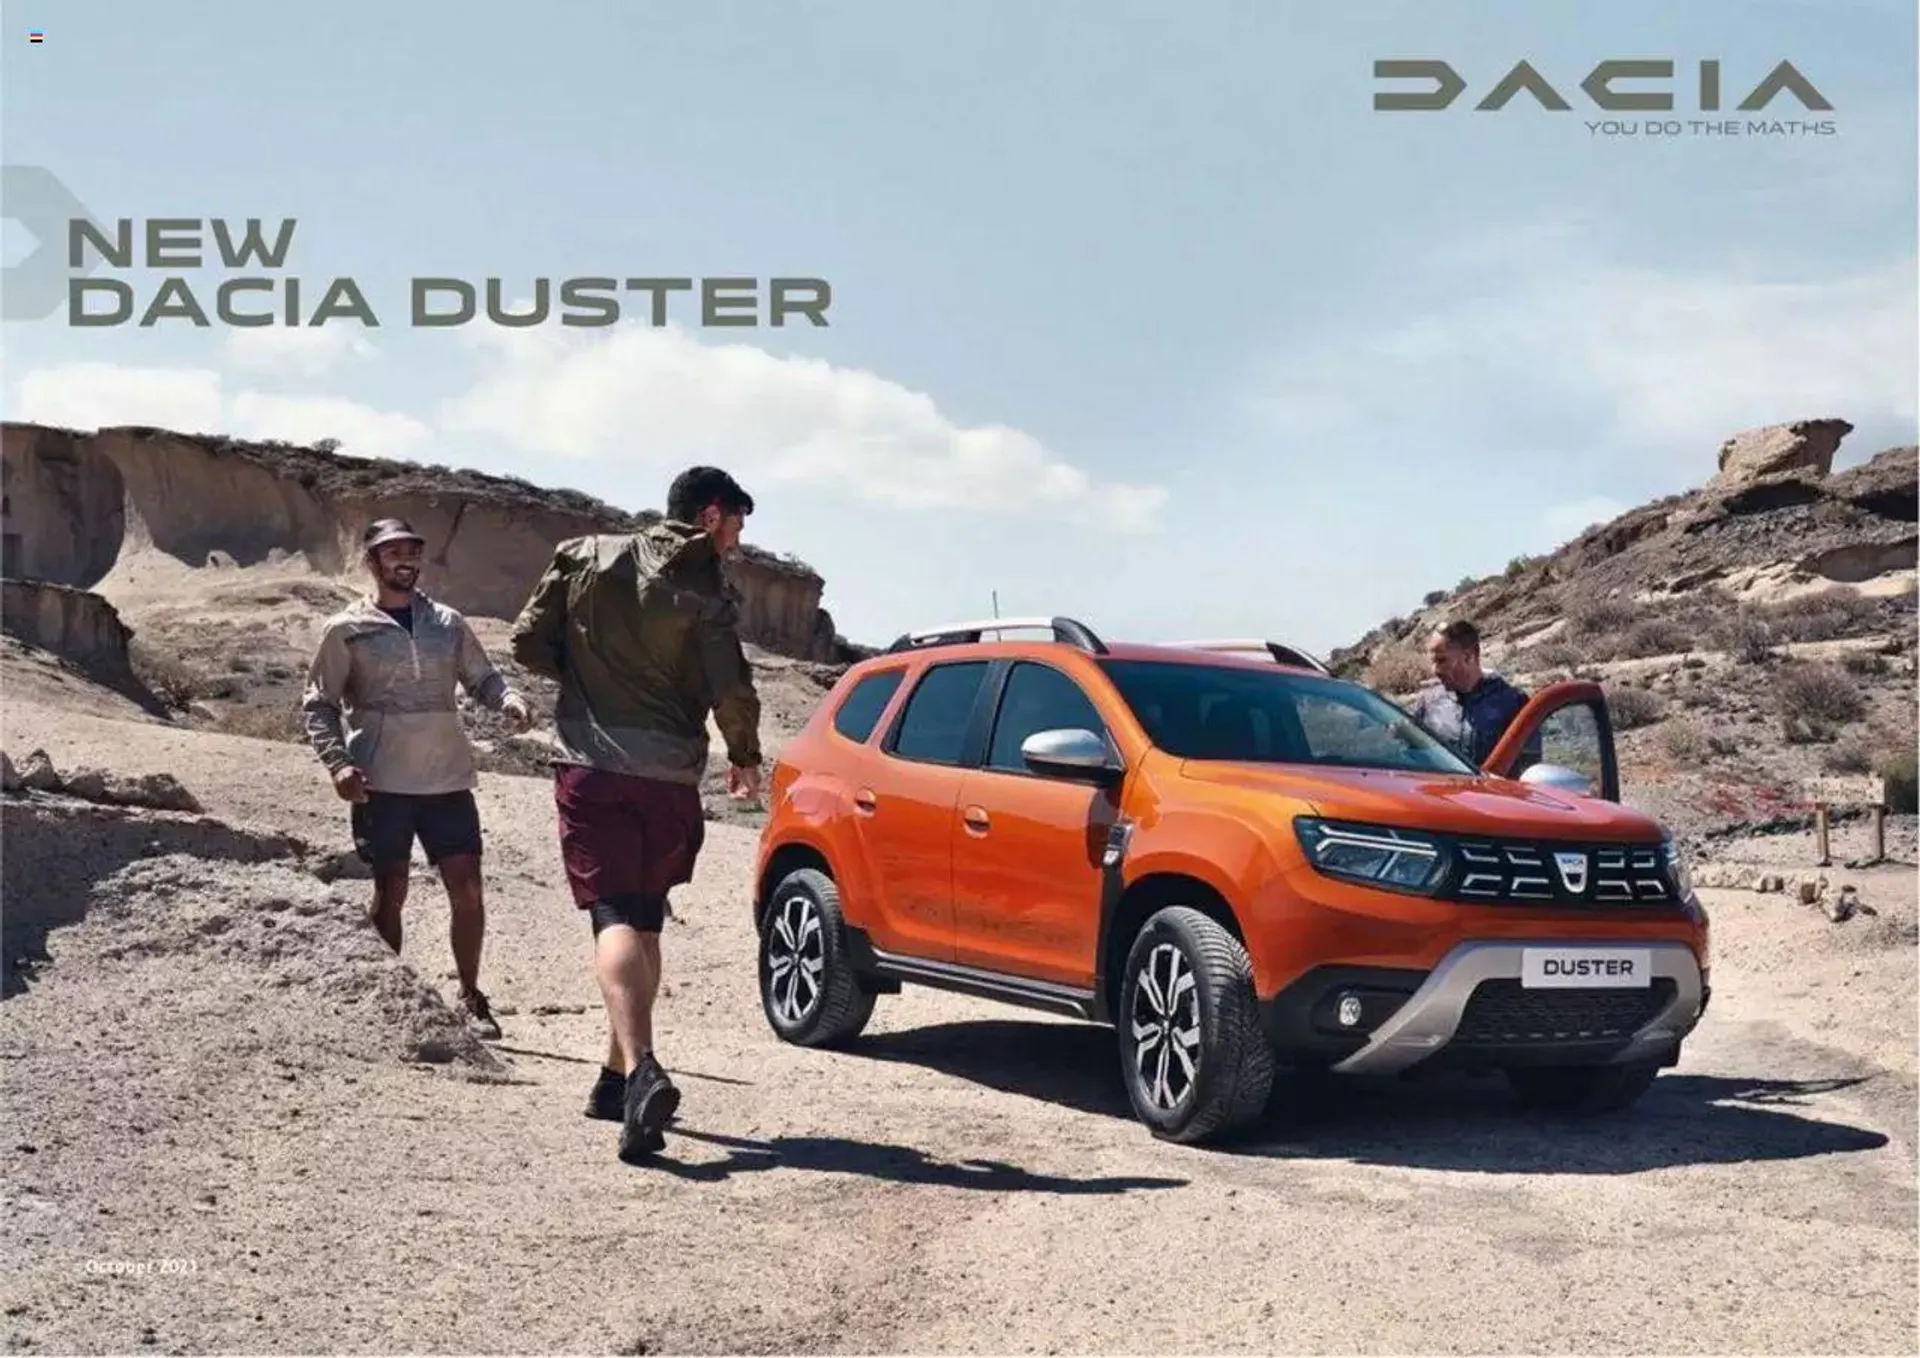 Dacia - New Dacia Duster - 0